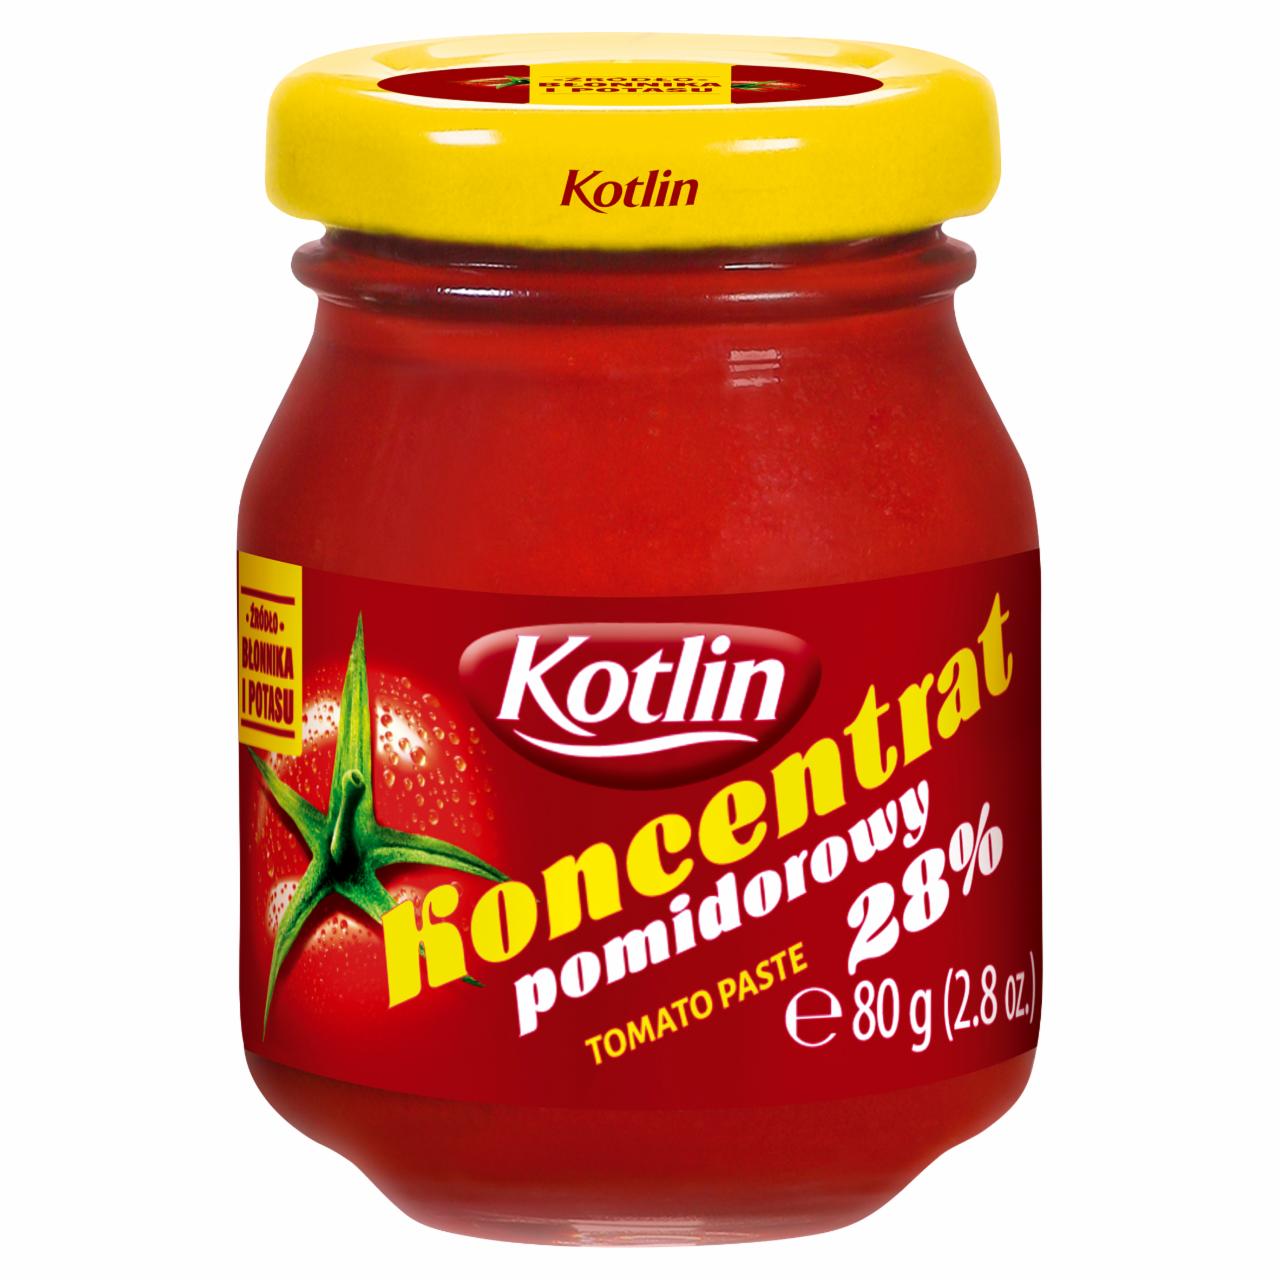 Zdjęcia - Kotlin Koncentrat pomidorowy 28% 80 g